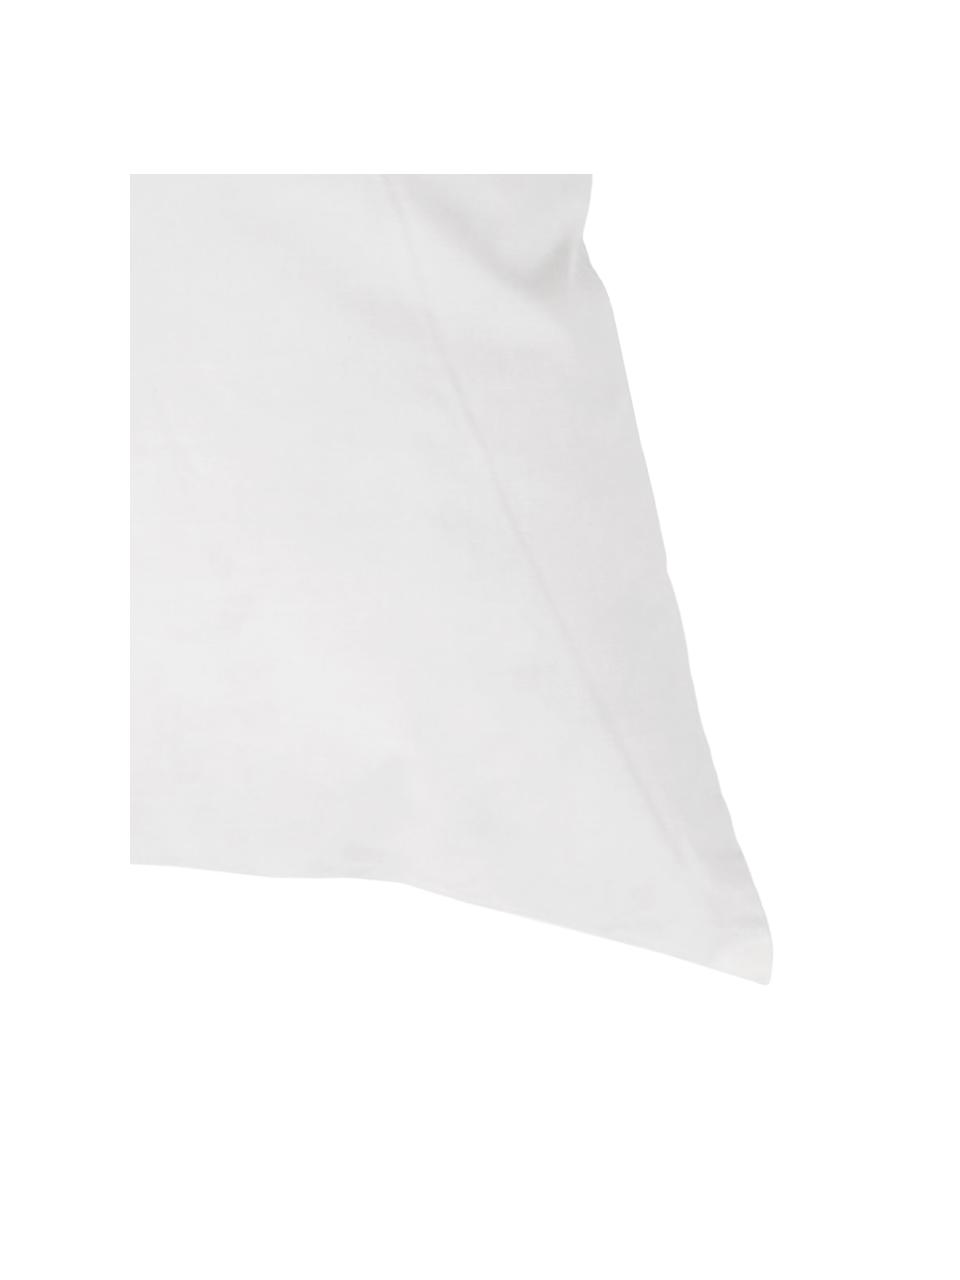 Kissen-Inlett Comfort, 40x60, Feder-Füllung, Bezug: Feinköper, 100% Baumwolle, Weiß, 40 x 60 cm